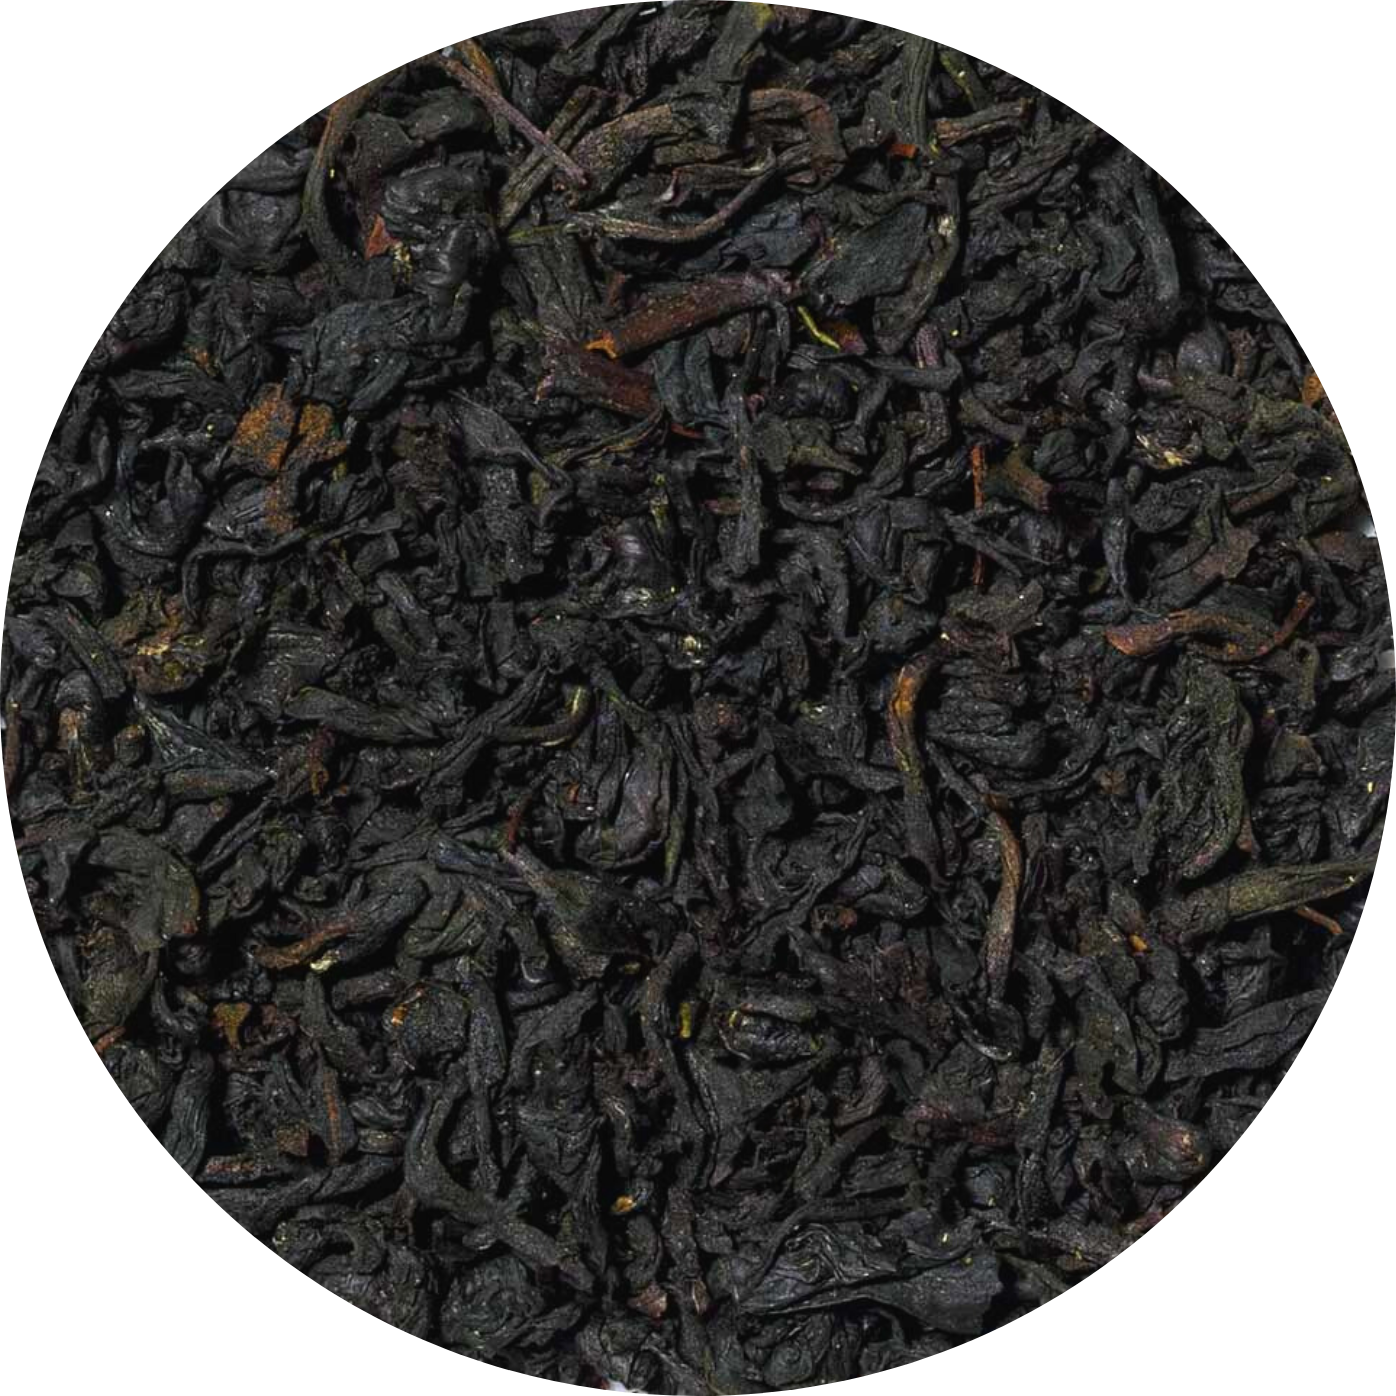 BYLINCA Černý čaj BIO: Earl Grey Leaf Organic Tea 200g, 500g 1 ks: 200g